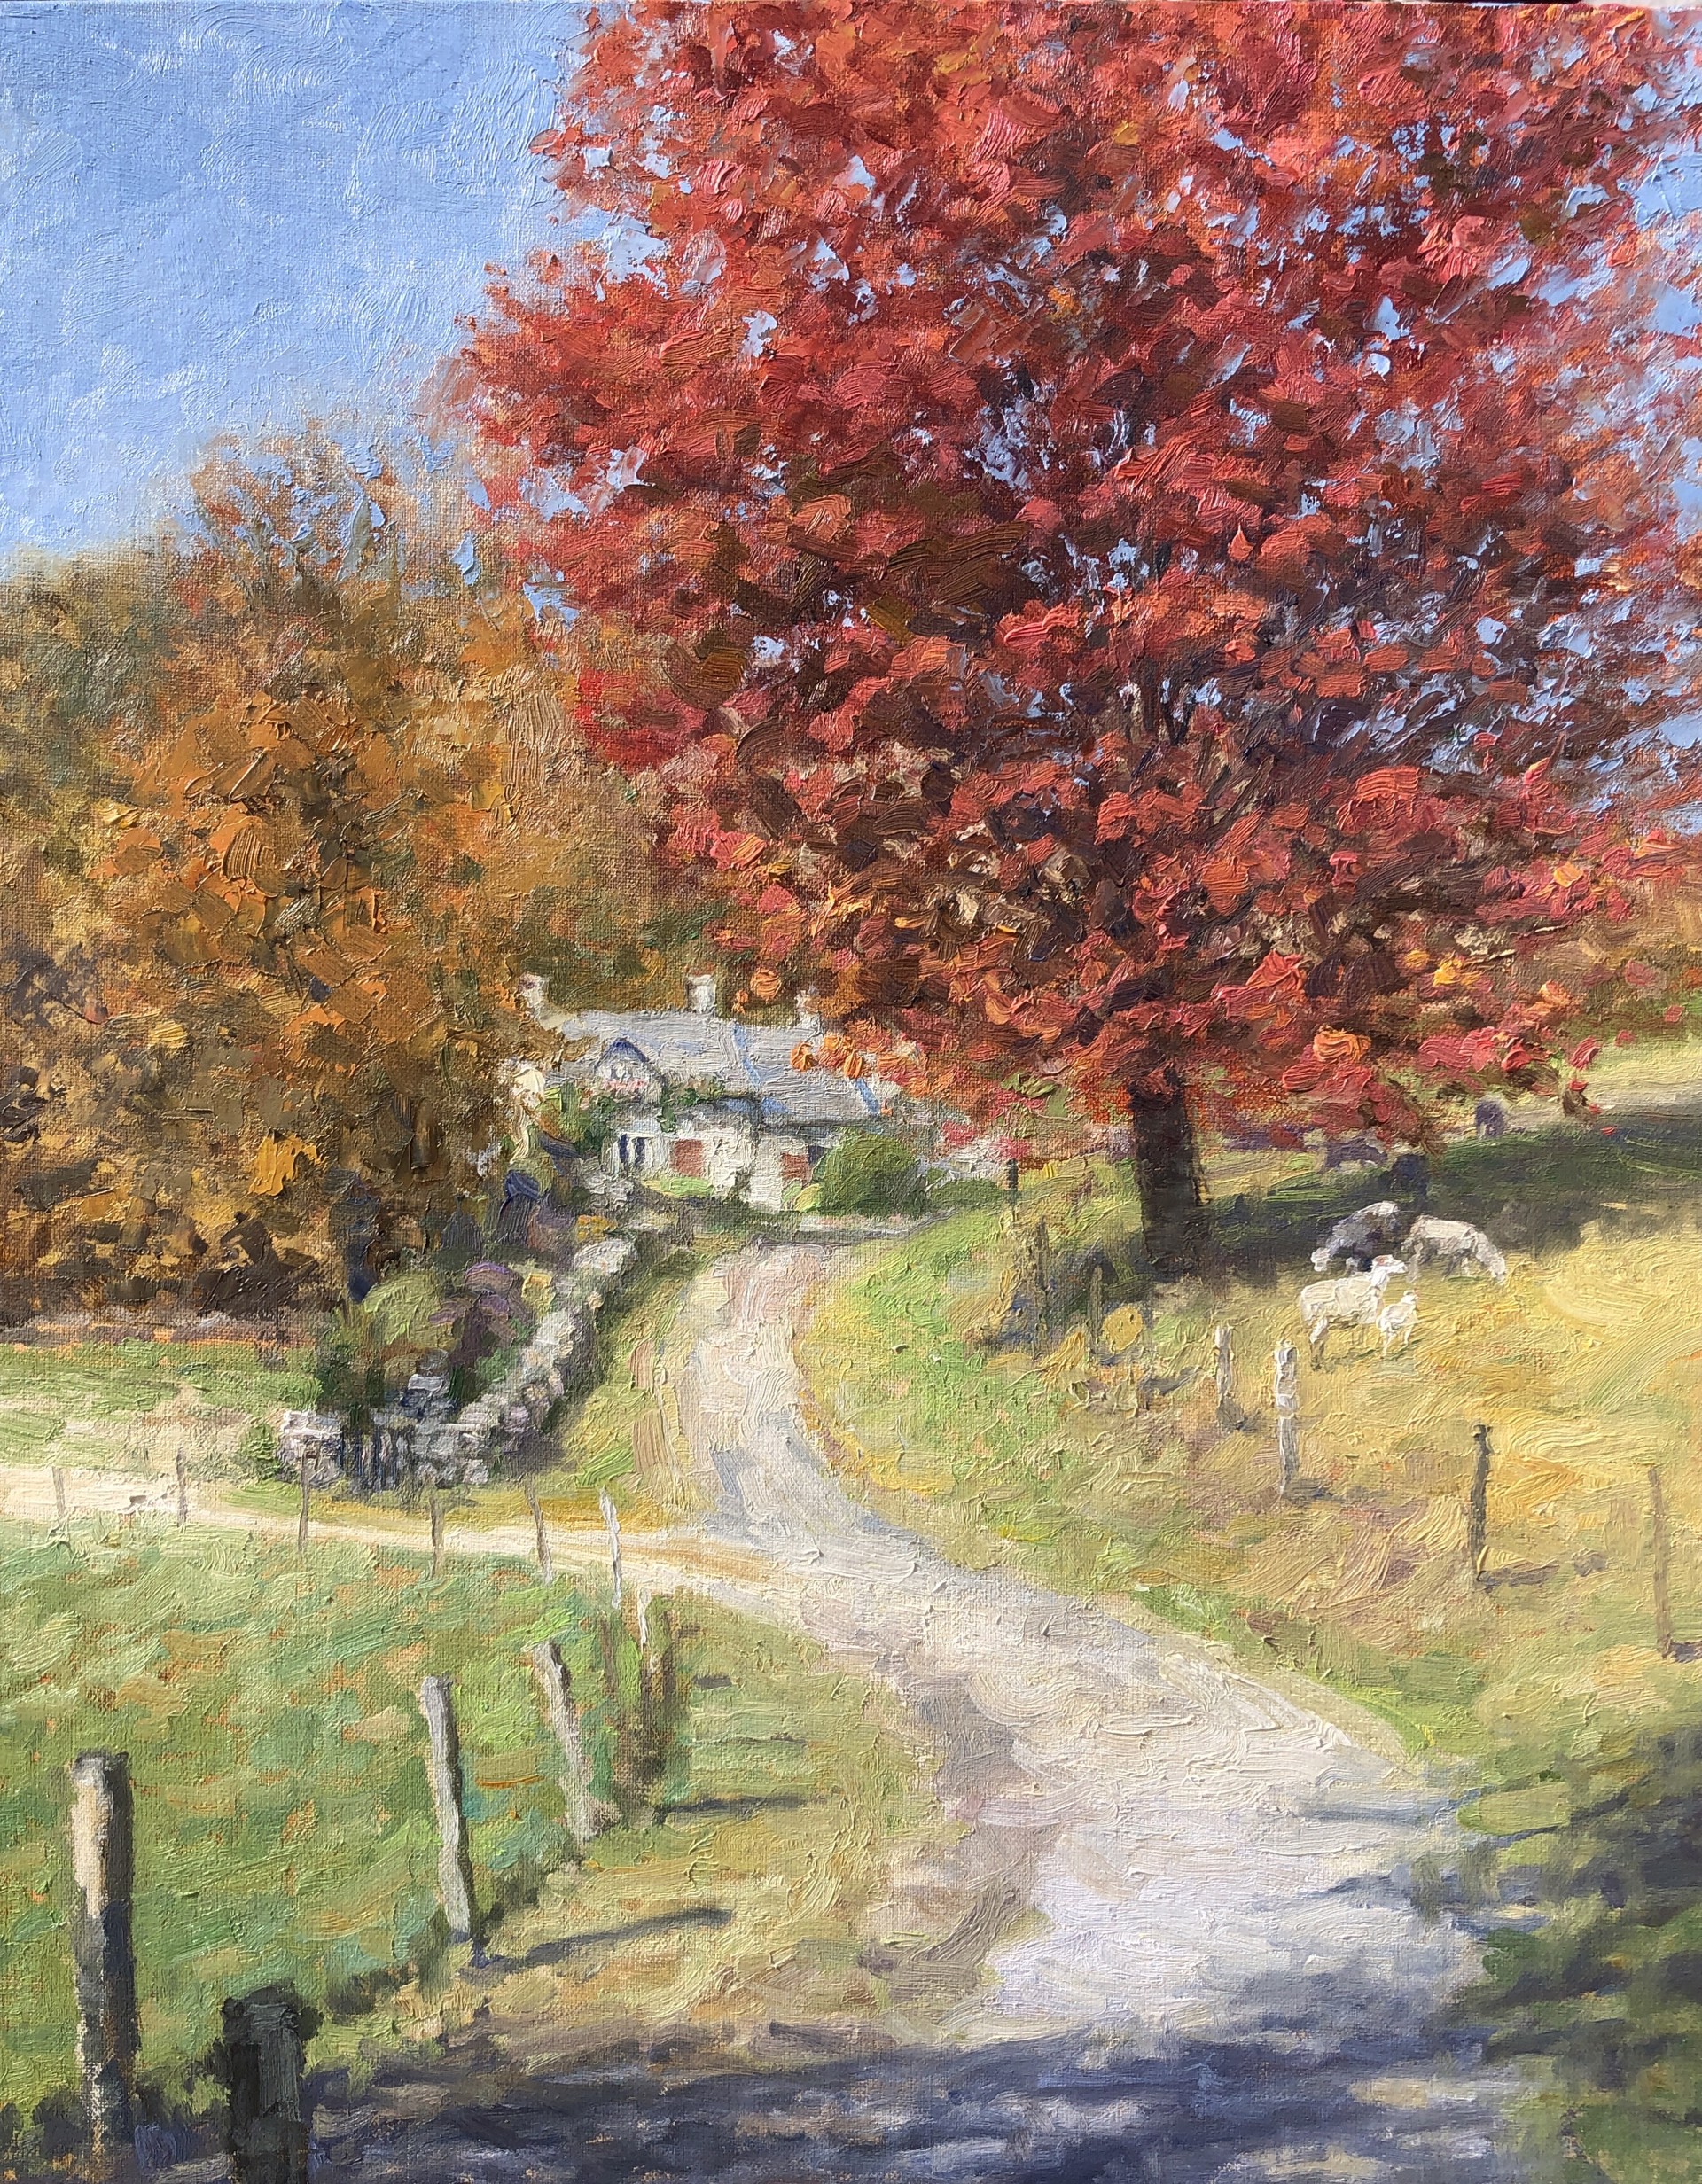 Kirkpatrick Lane in Fall by Mitch Kolbe